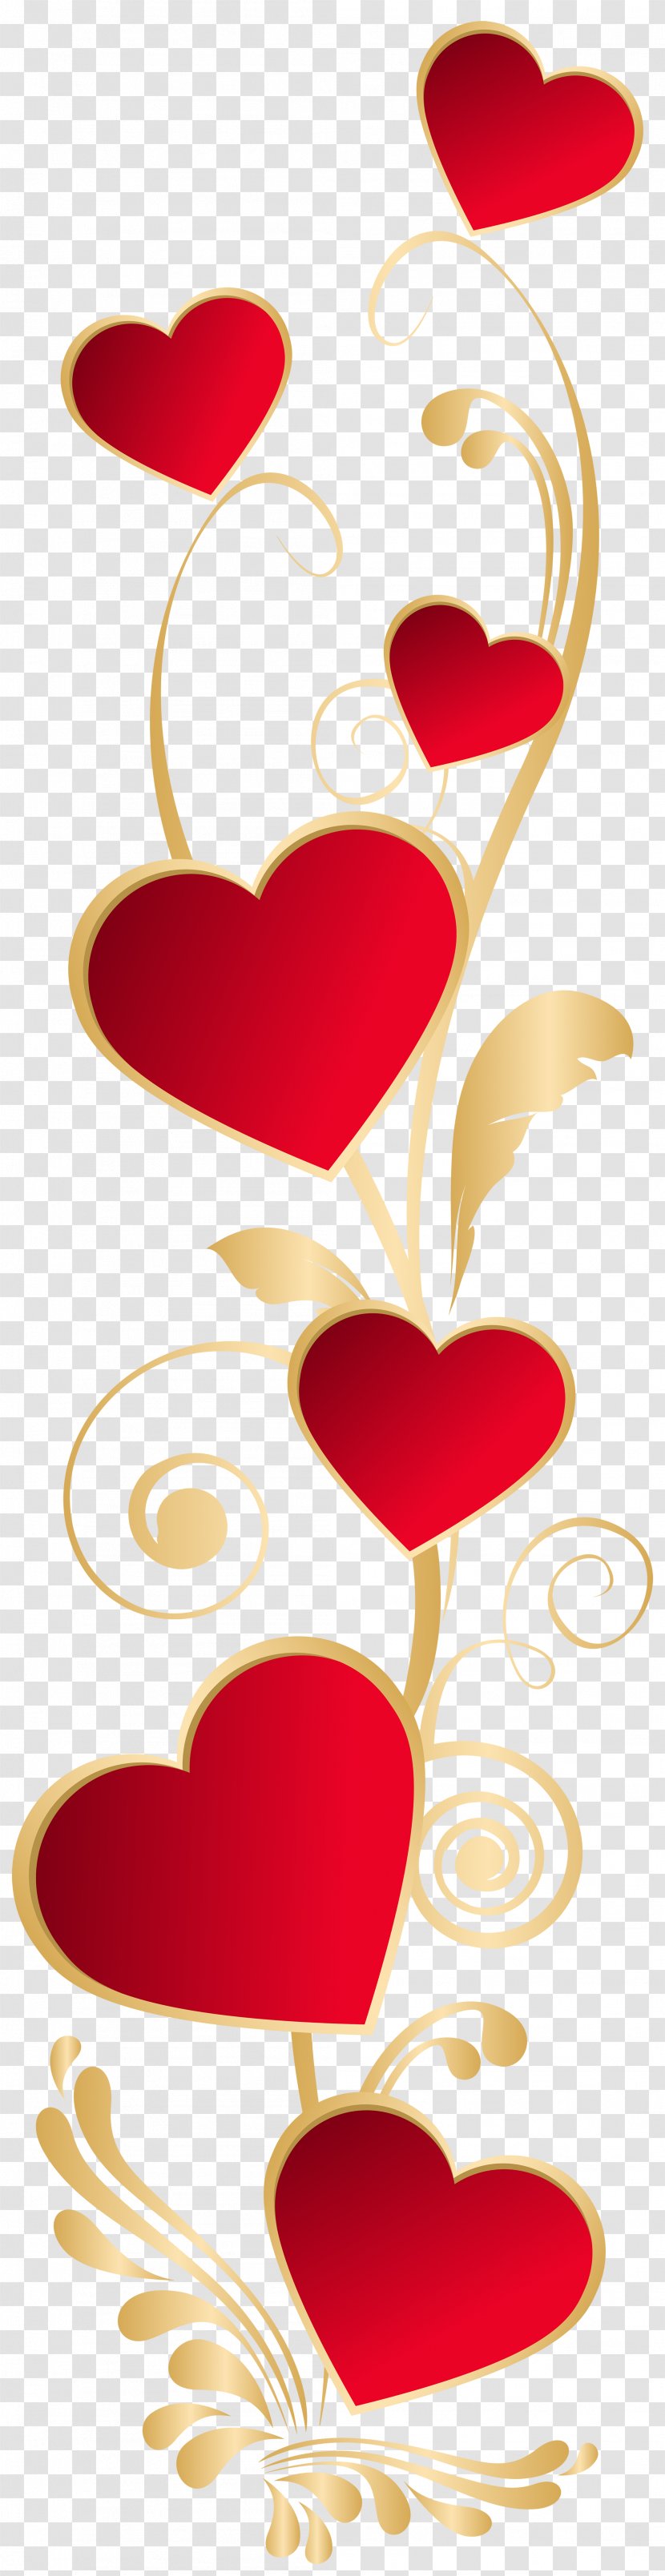 Heart Valentine's Day Clip Art - Illustration - Hearts Deco Element Transparent PNG